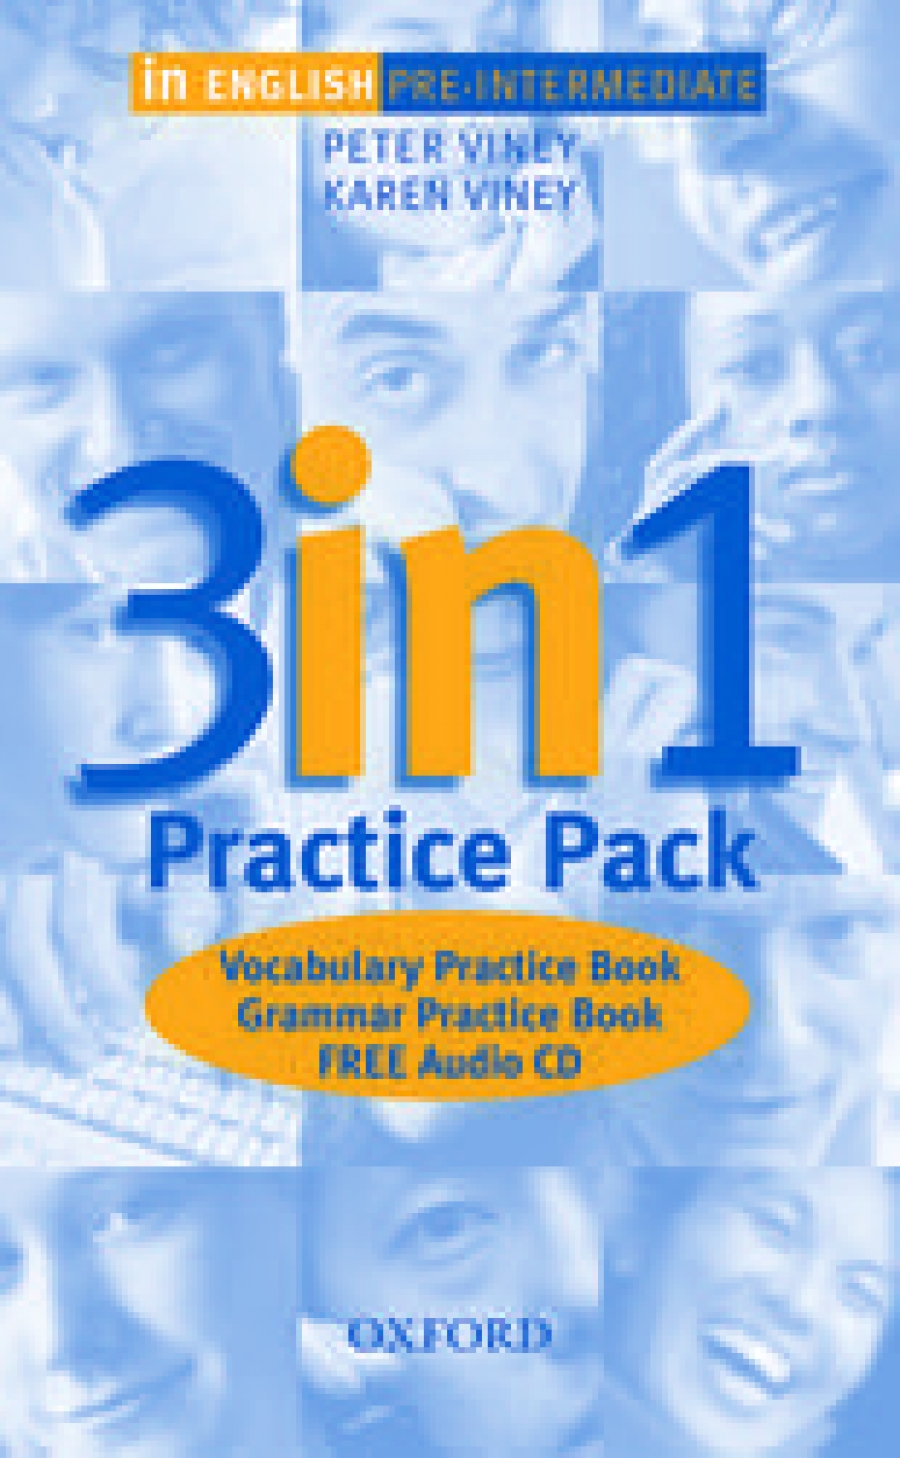 Peter Viney, Karen Viney In English Pre-Intermediate 3-in-1 Practice Pack 